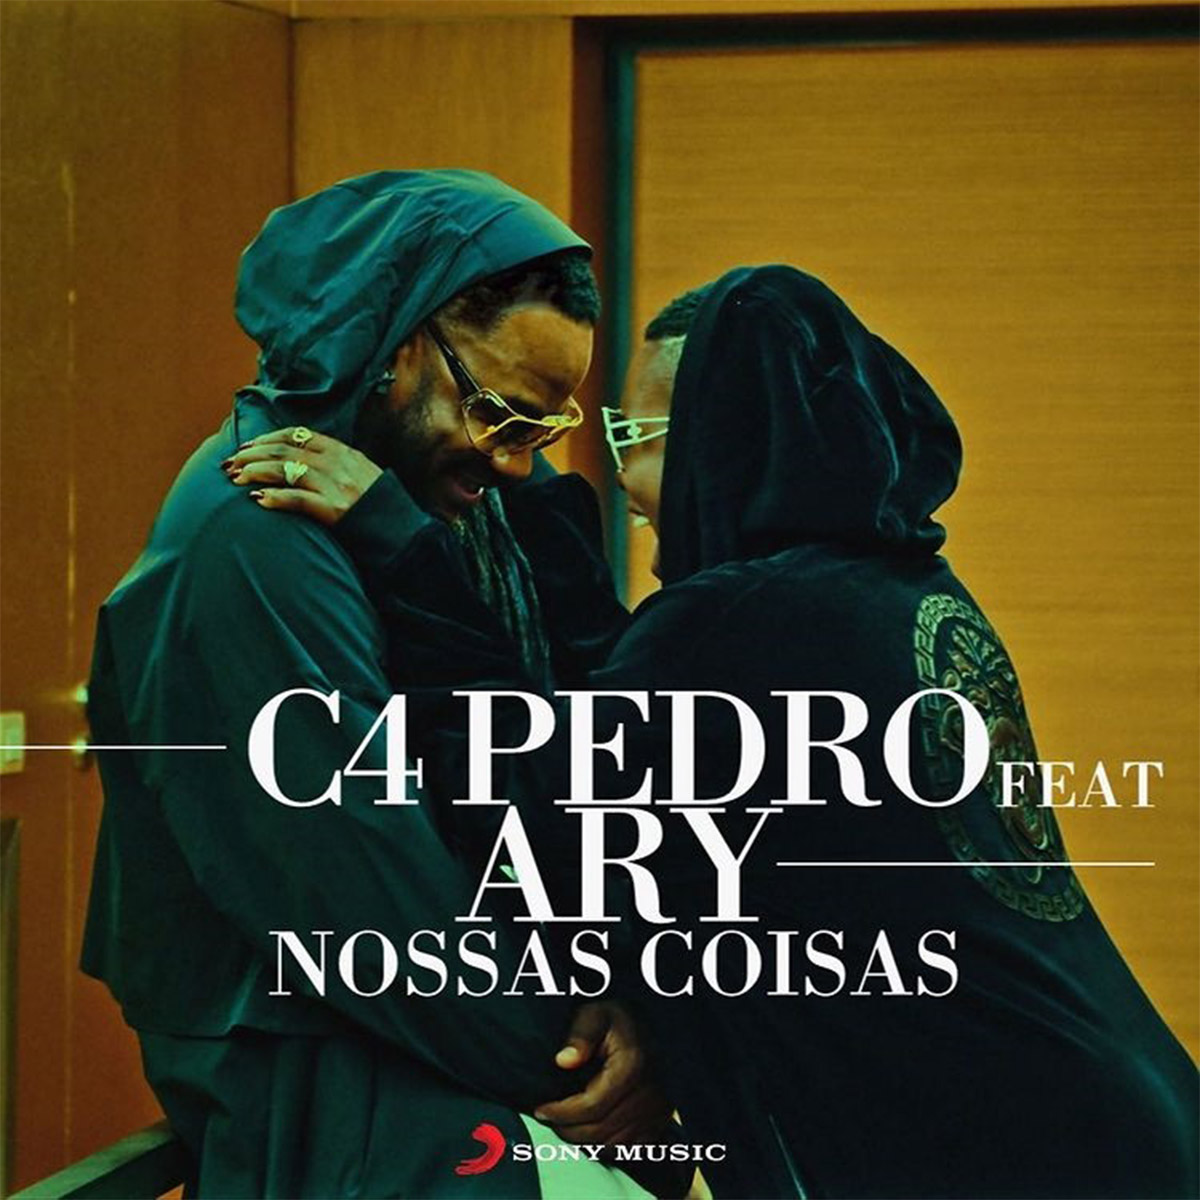 C4 Pedro Nossas Coisas Feat Ary Download Baixar Musica Video 2021 Kamba Virtual